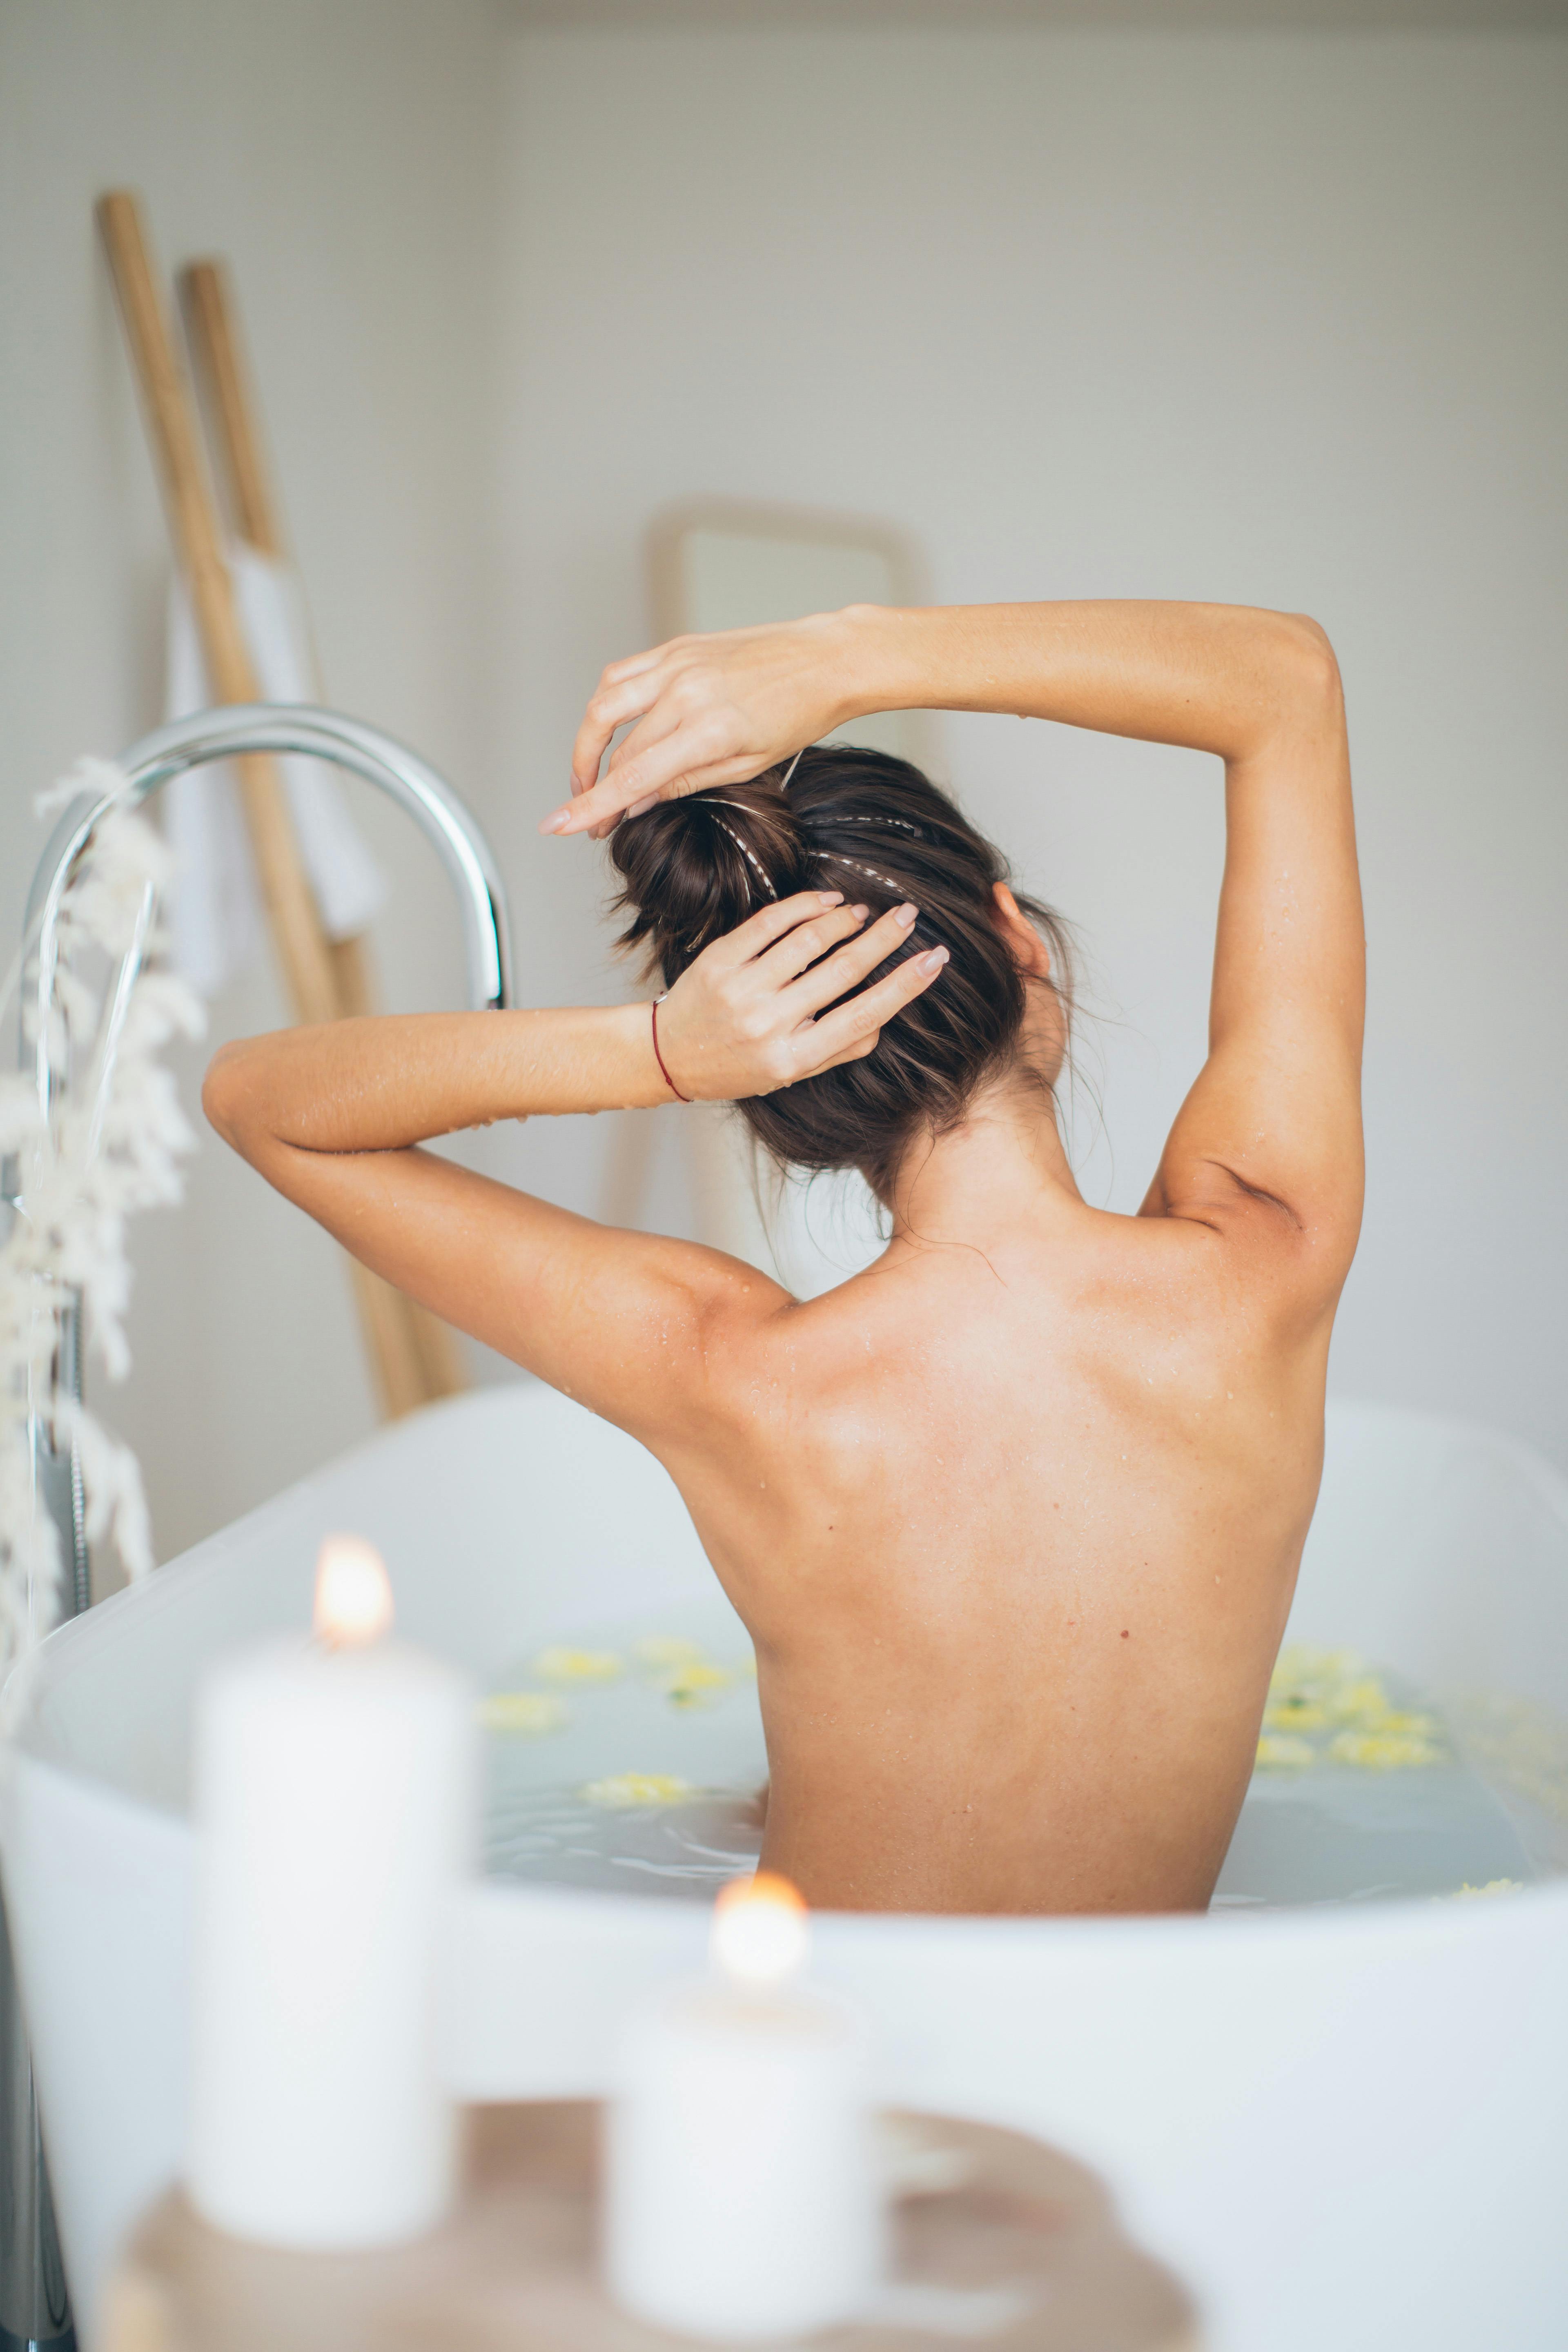 Woman Taking Bath Image & Photo (Free Trial)